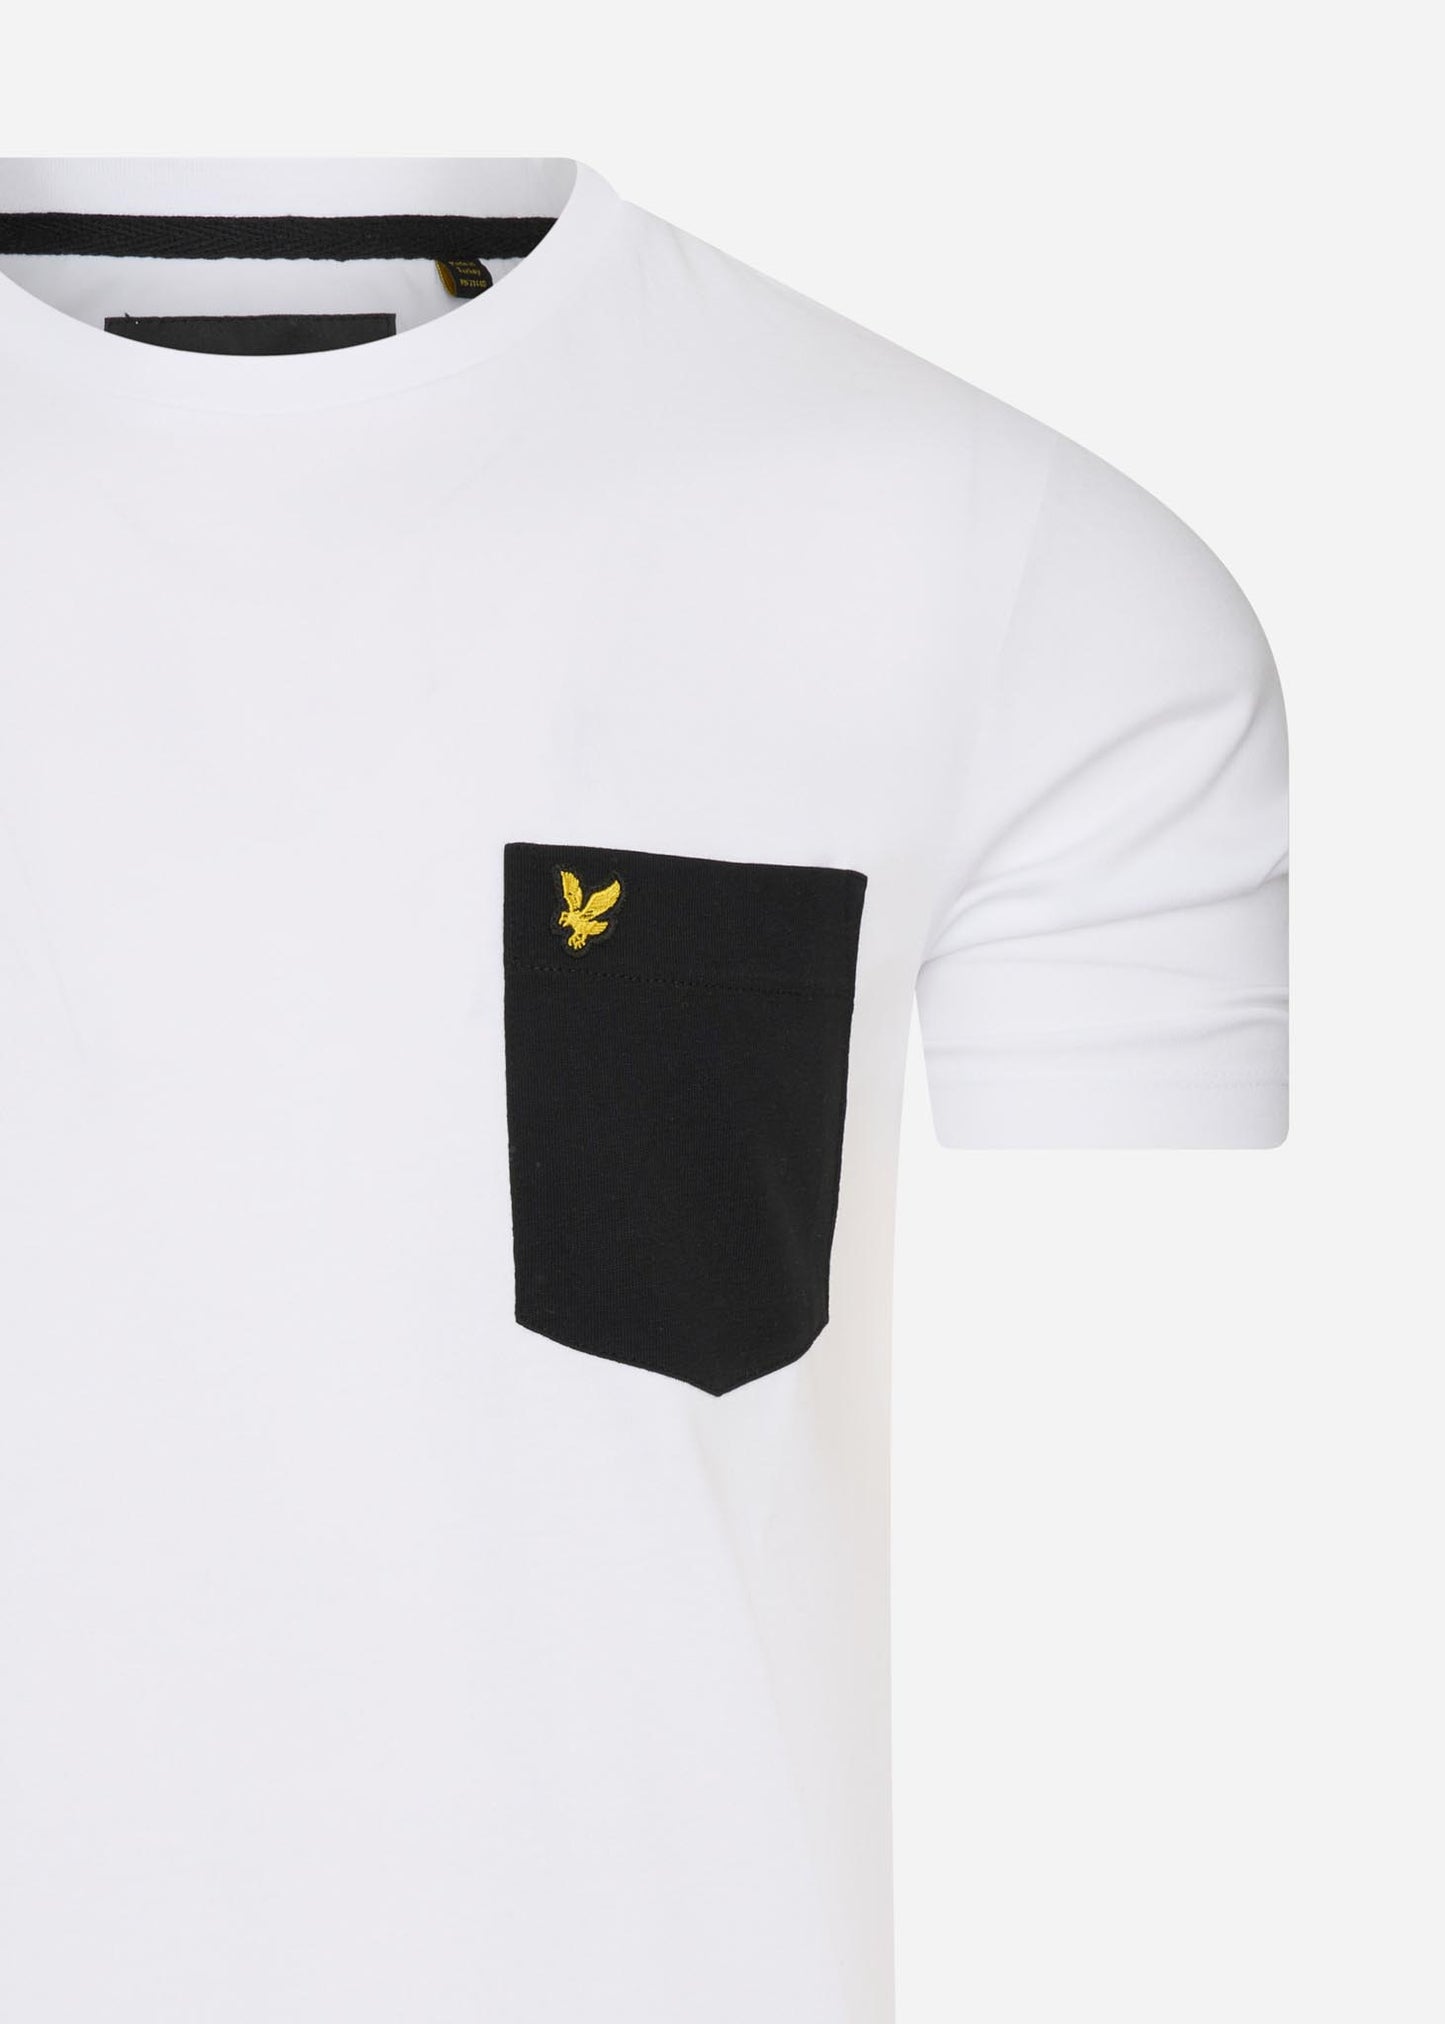 Contrast pocket t-shirt - white jet black